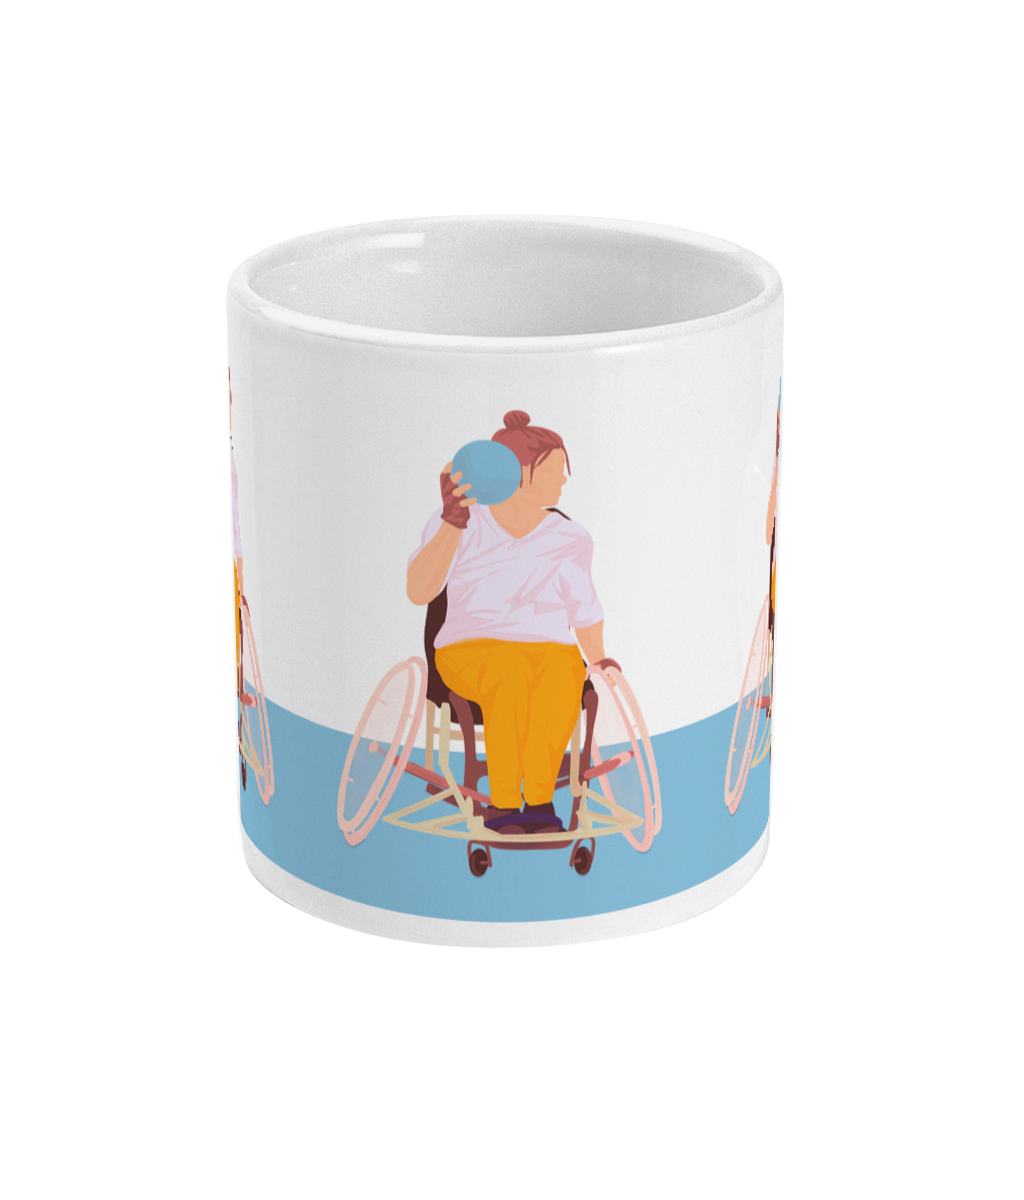 Tasse ou mug handfauteuil "Handball femme" - Personnalisable